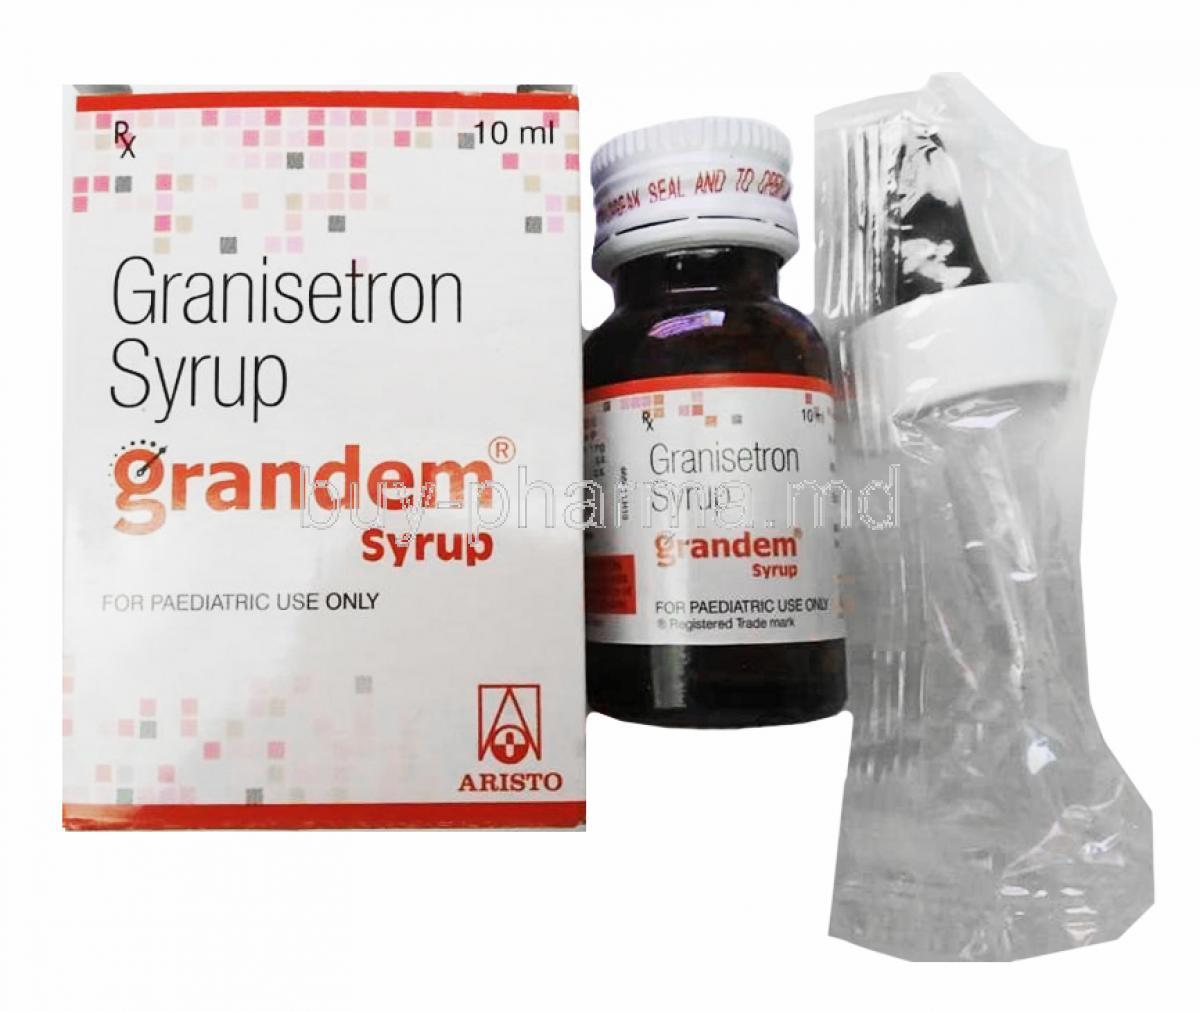 Grandem Syrup, Granisetron 10ml box and bottle